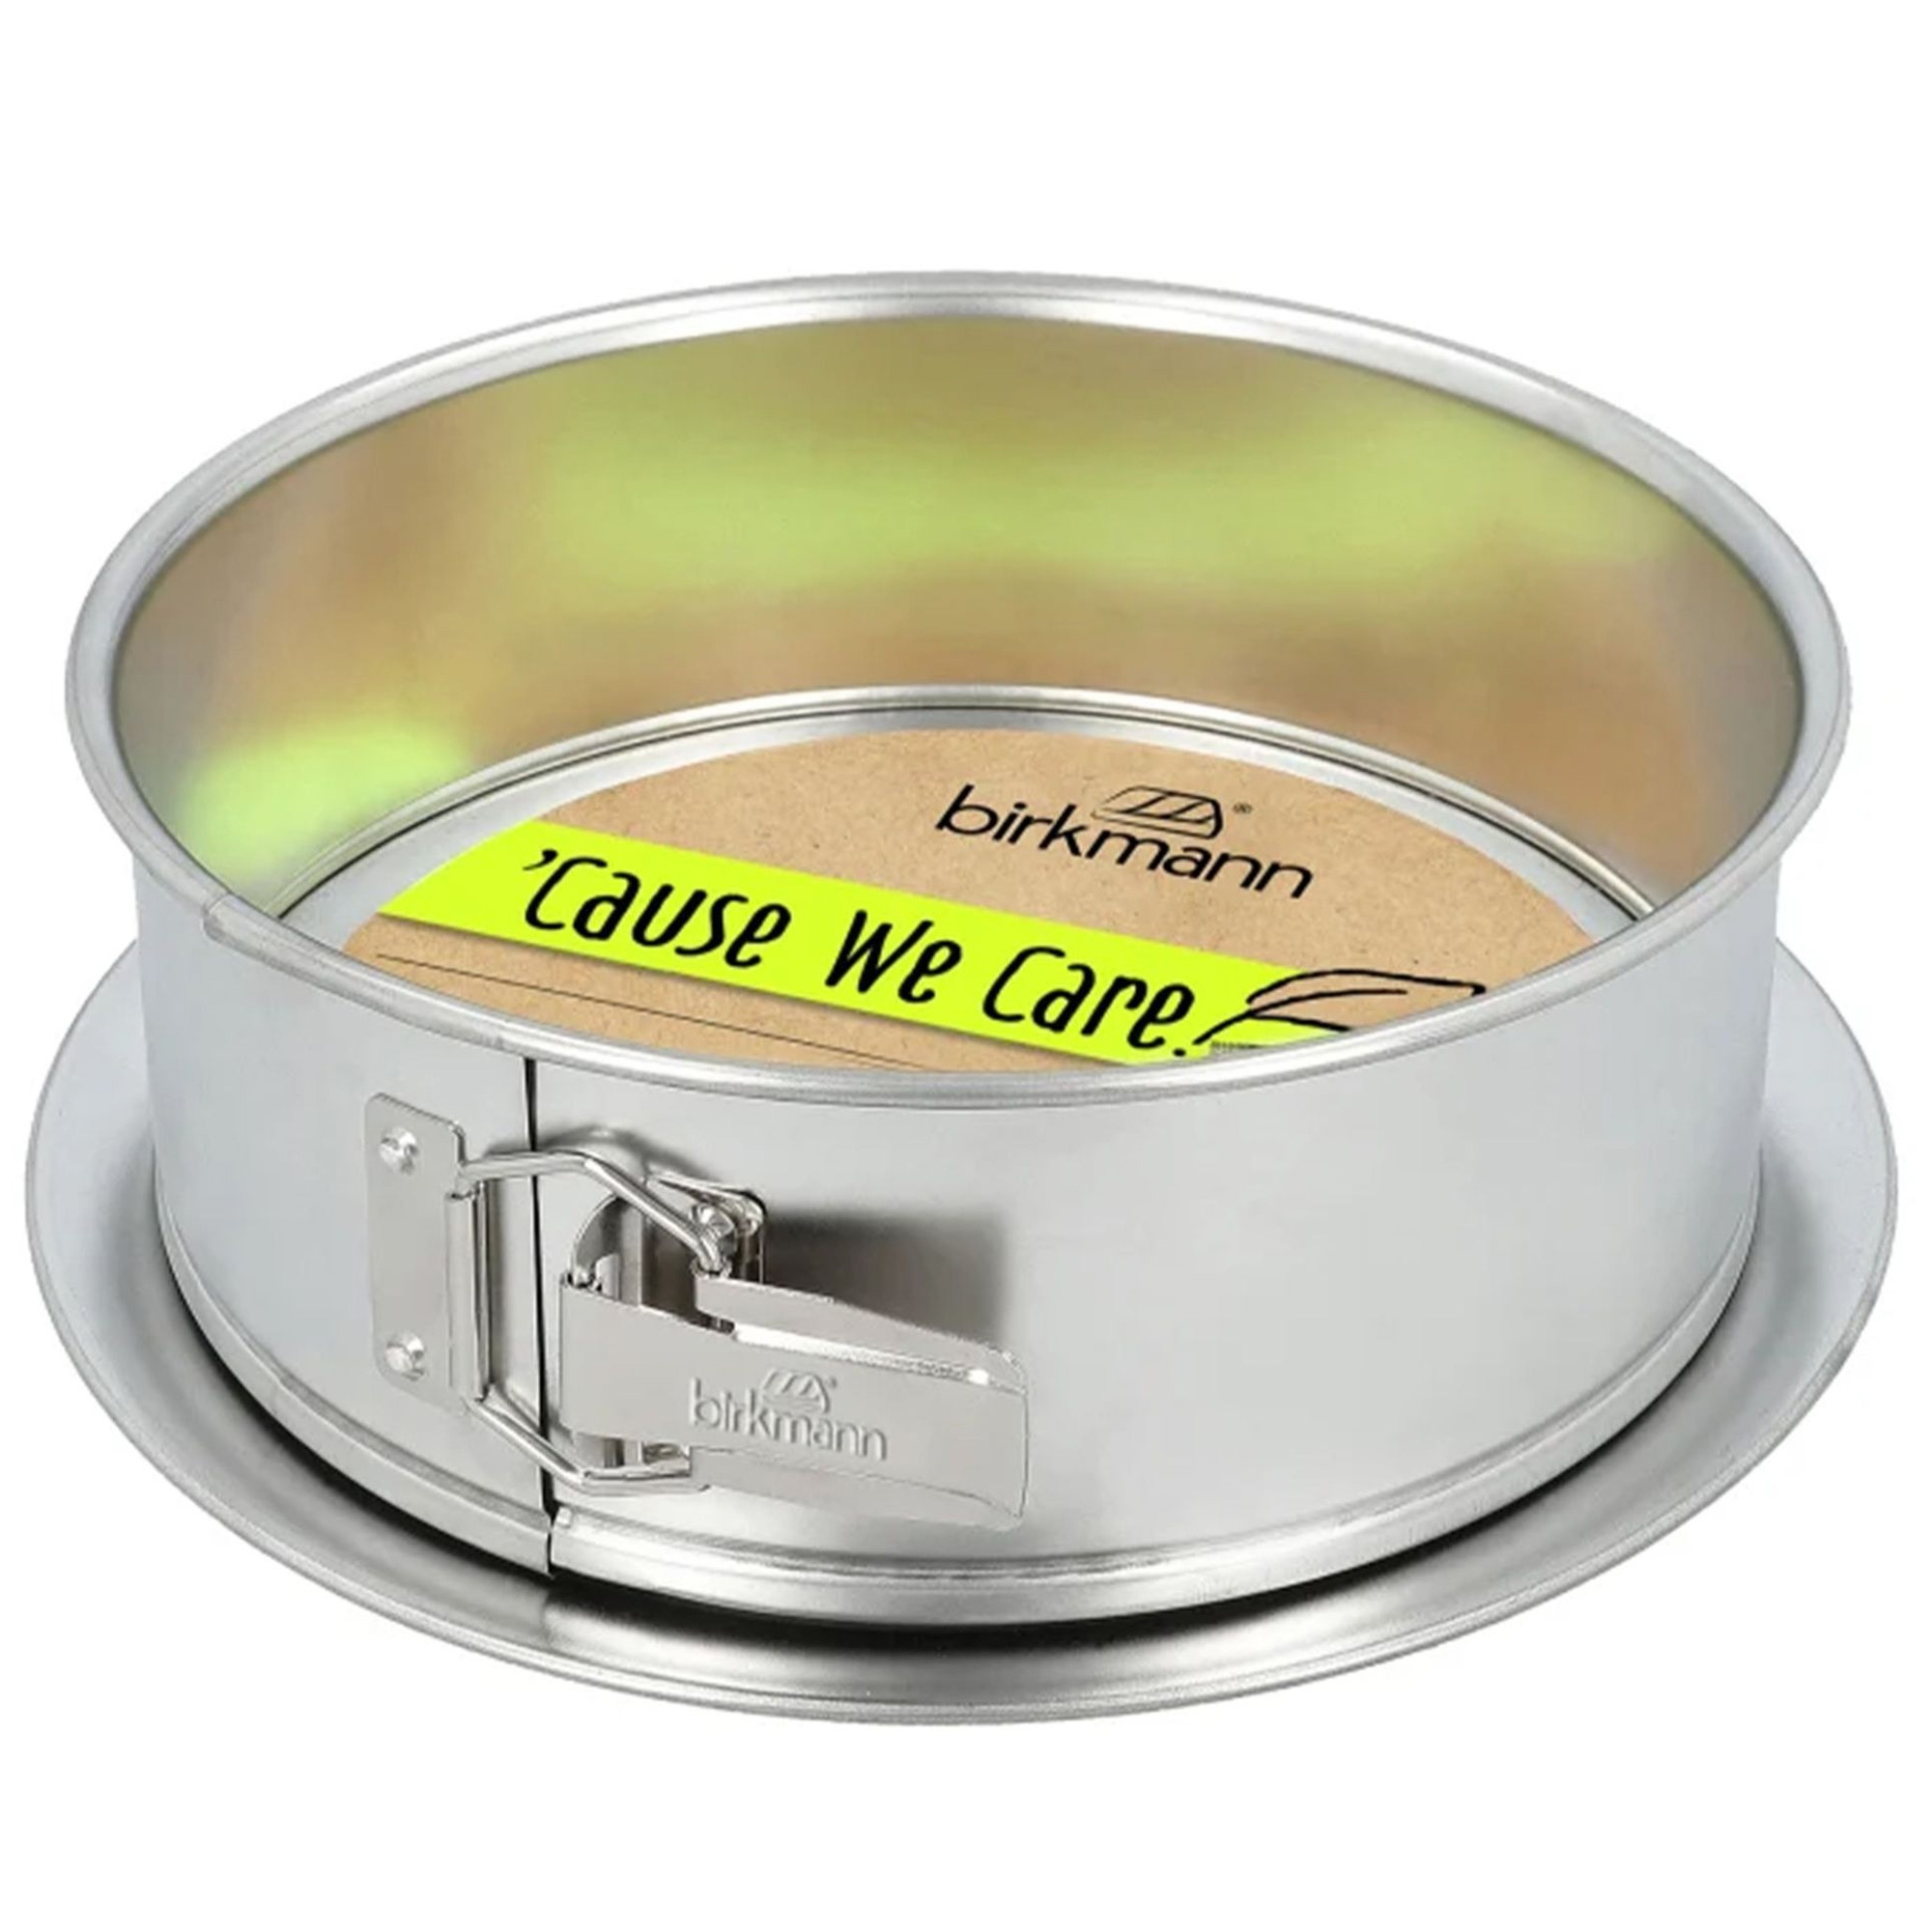 Birkmann - Baking tin Ø 24 cm - Cause We Care